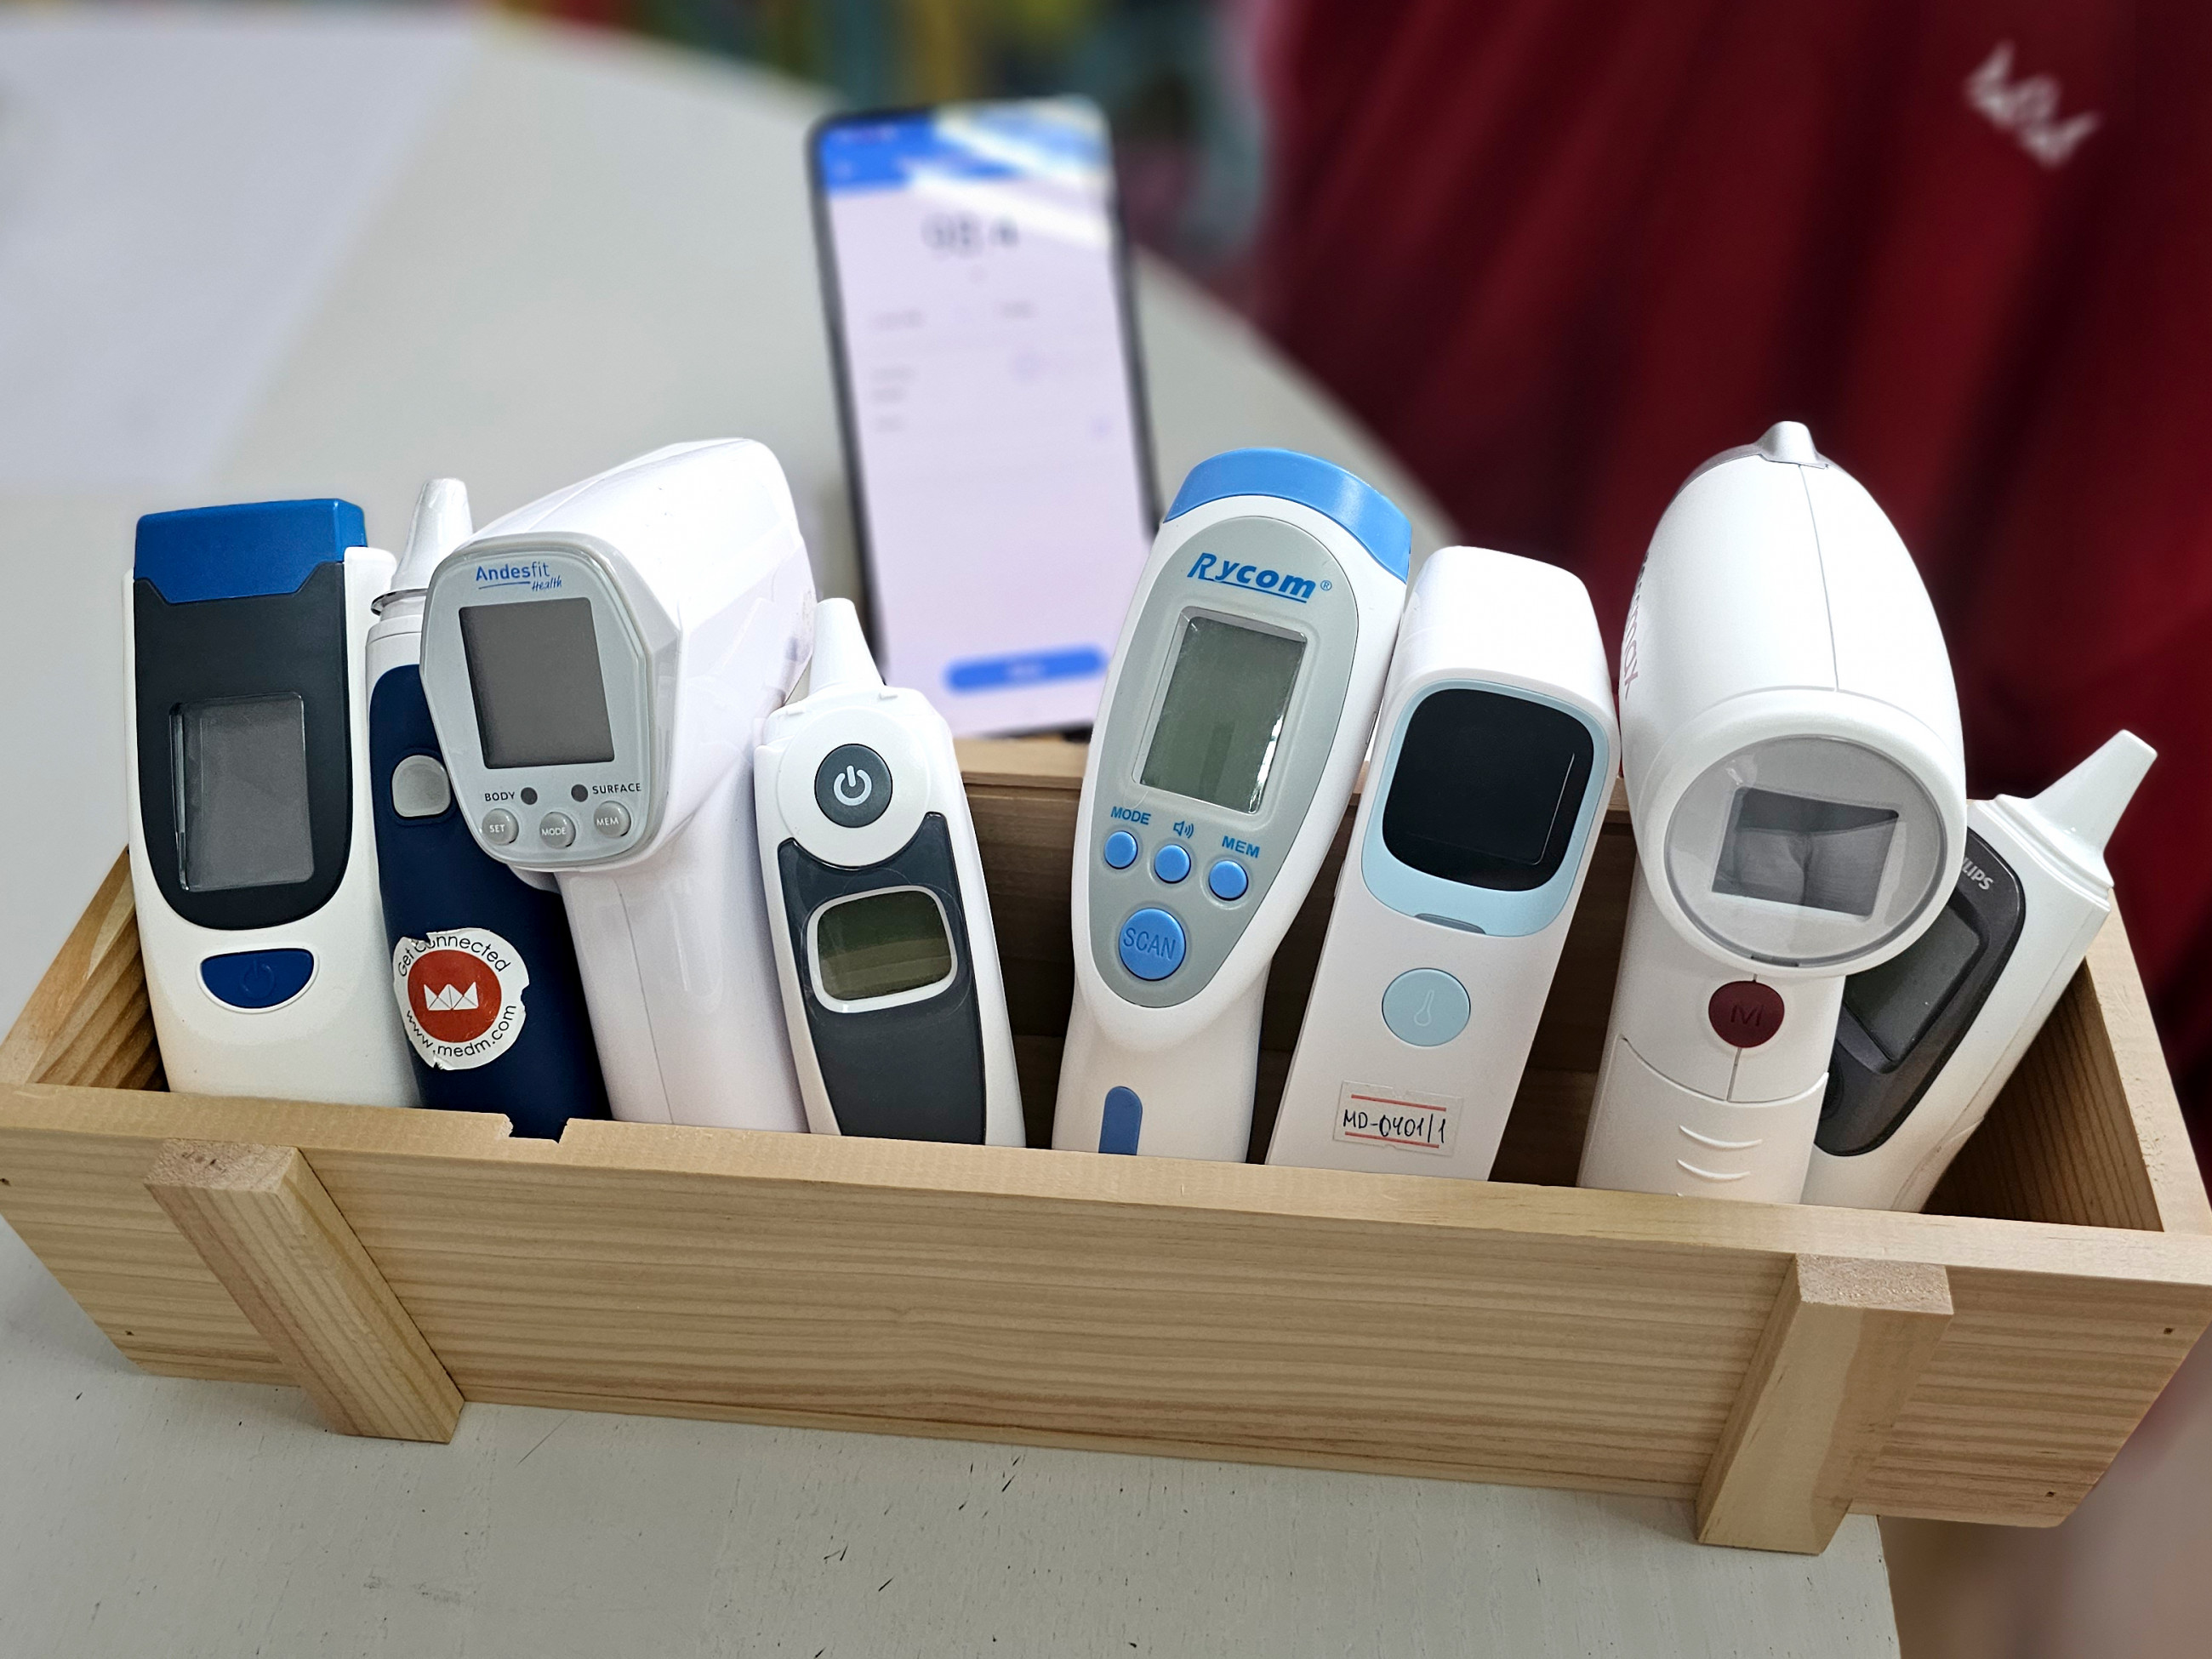 Device, digital thermometer, heat, medicine, temperature